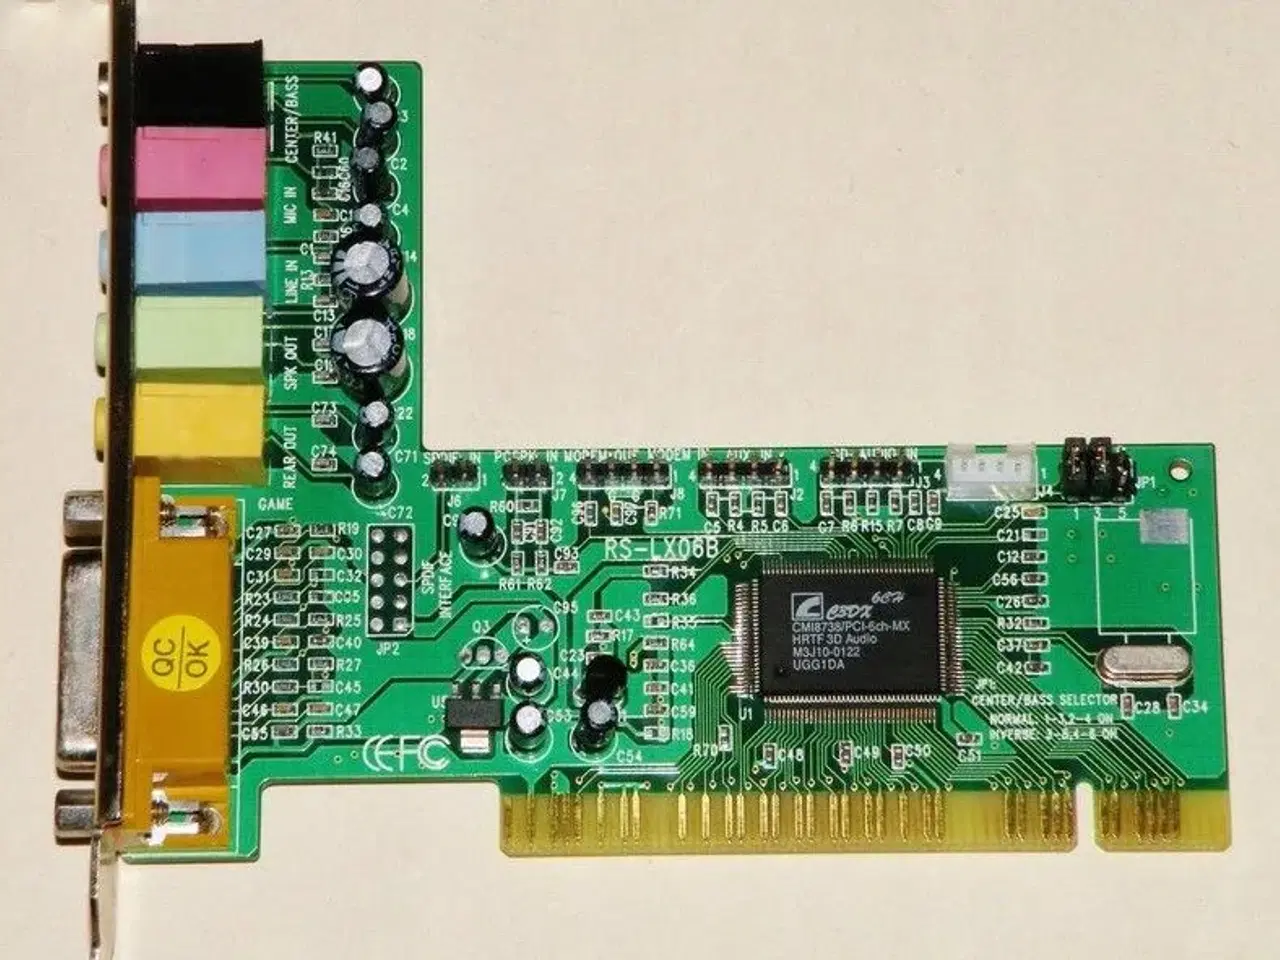 Billede 2 - Lydkort CMI 8738/PCI-6ch-MX RS-LX06B